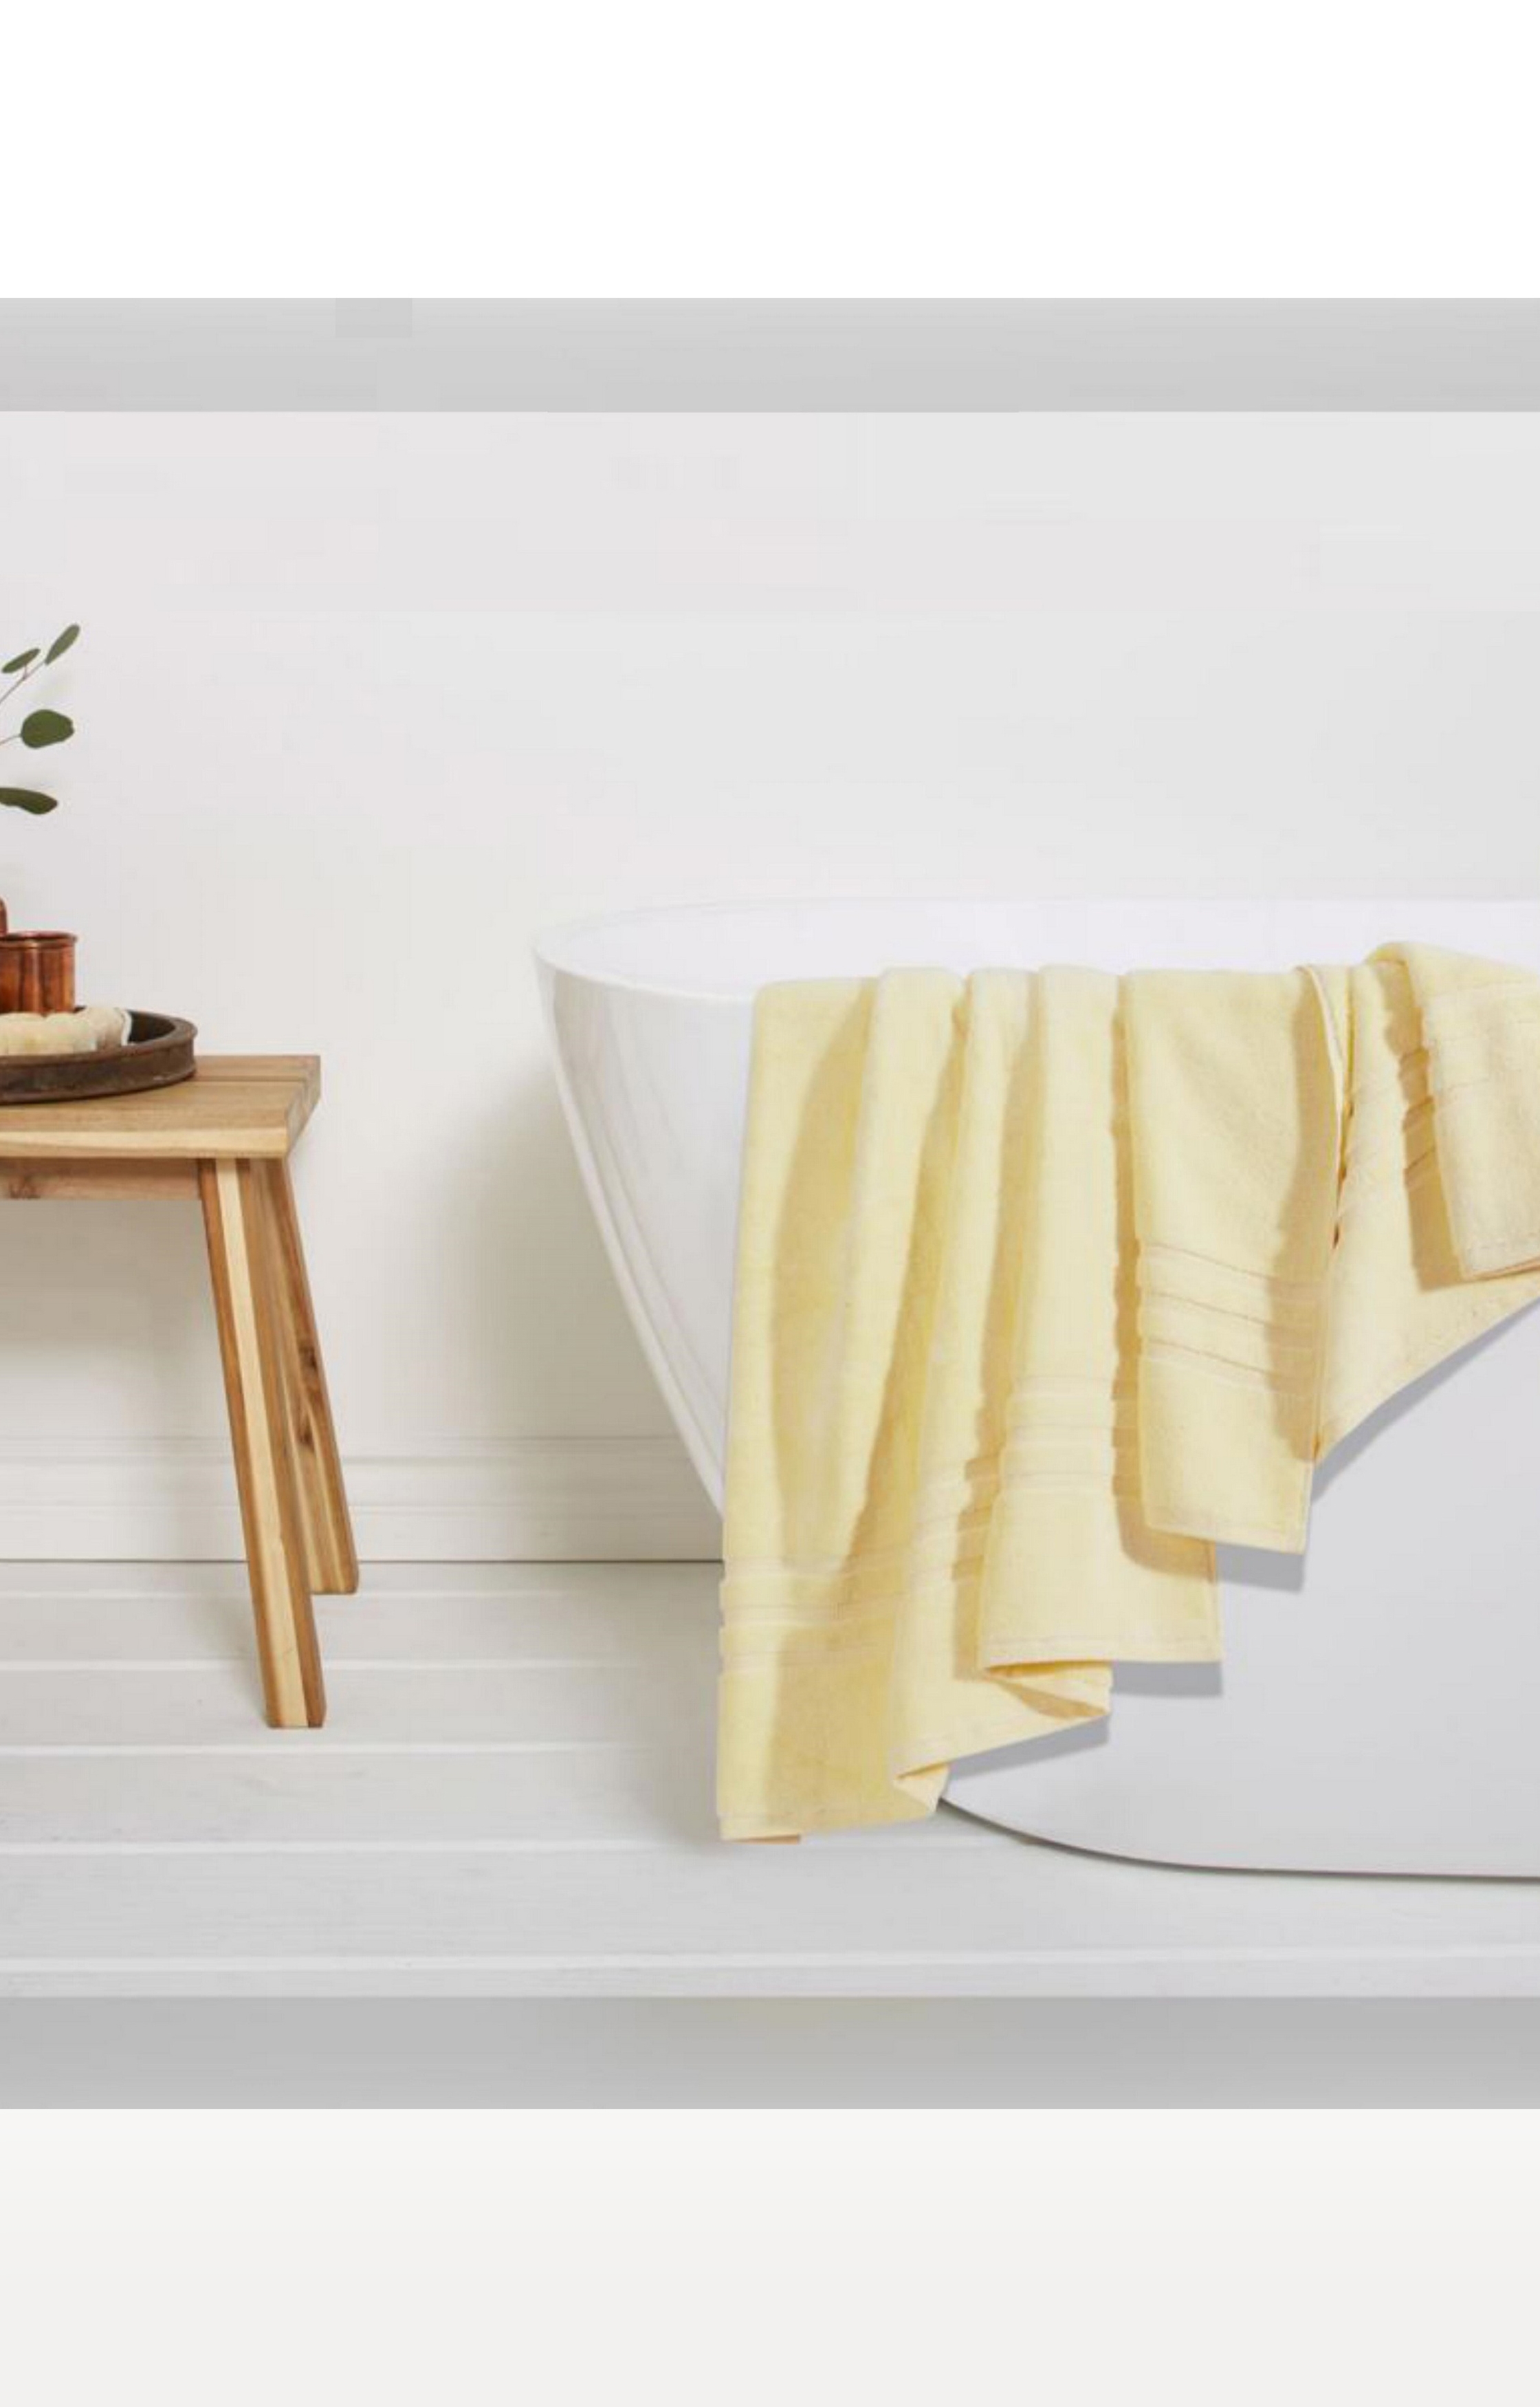 Sita Fabrics | Sita Fabrics Premium Cotton Super Soft Zero Twist Yarn Very Airy 600 GSM Bath Towel - Yellow - (24x48 Inch)